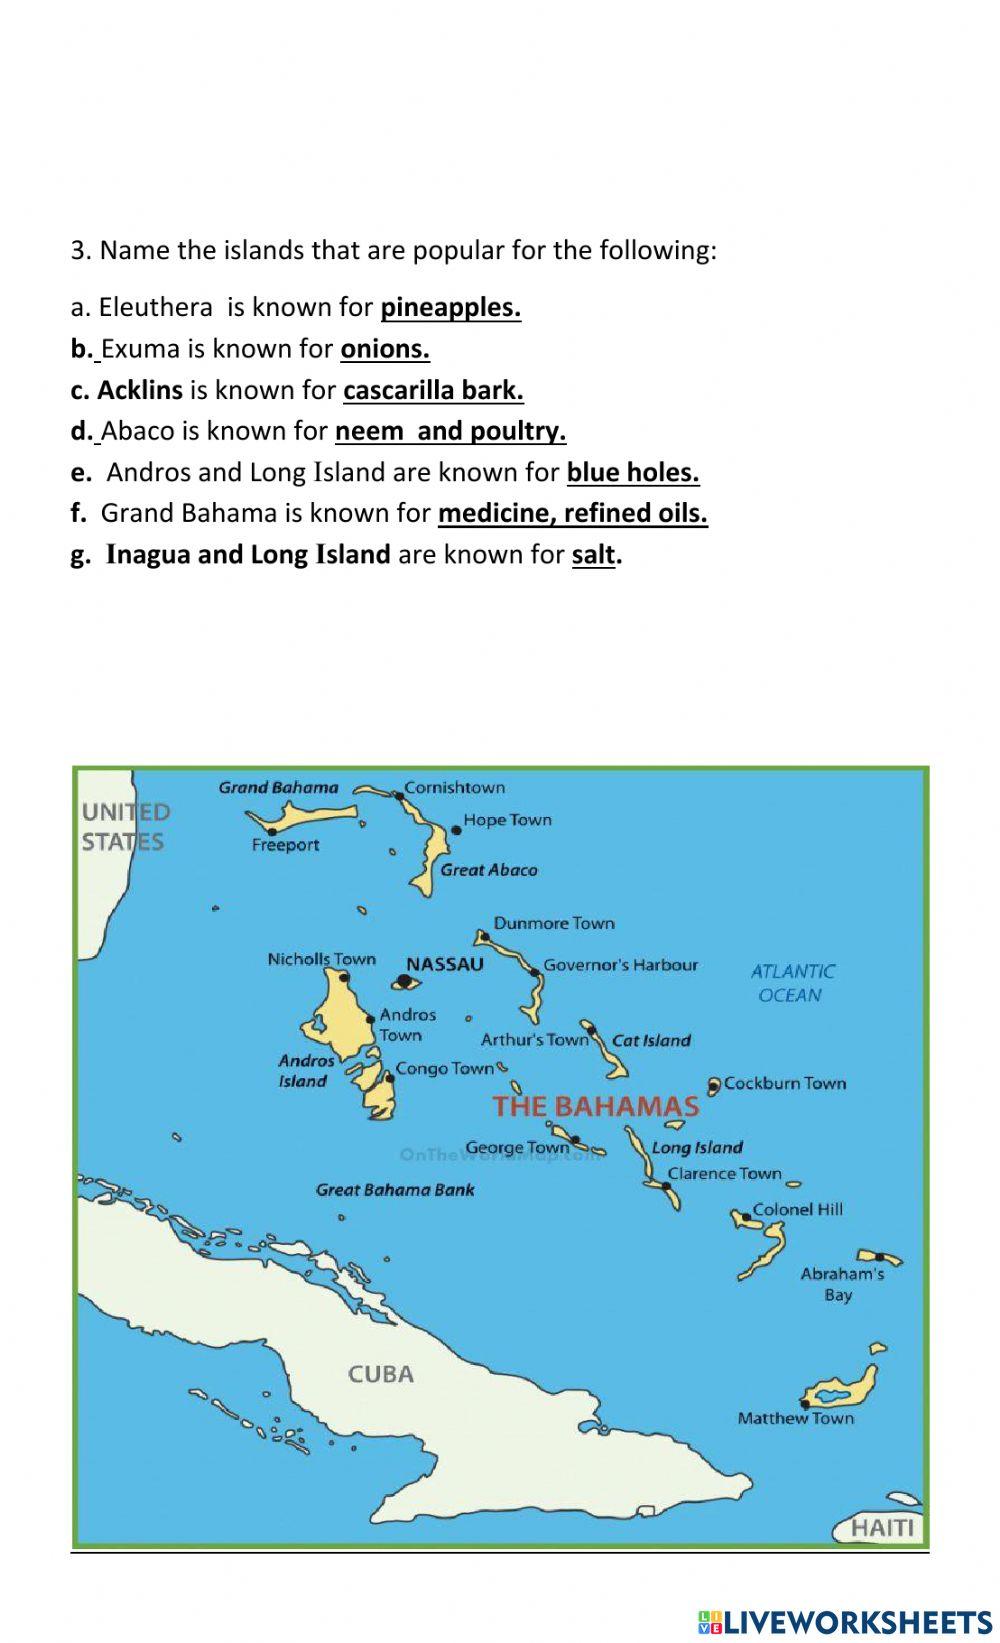 Hundreds of Islands - The Bahamas